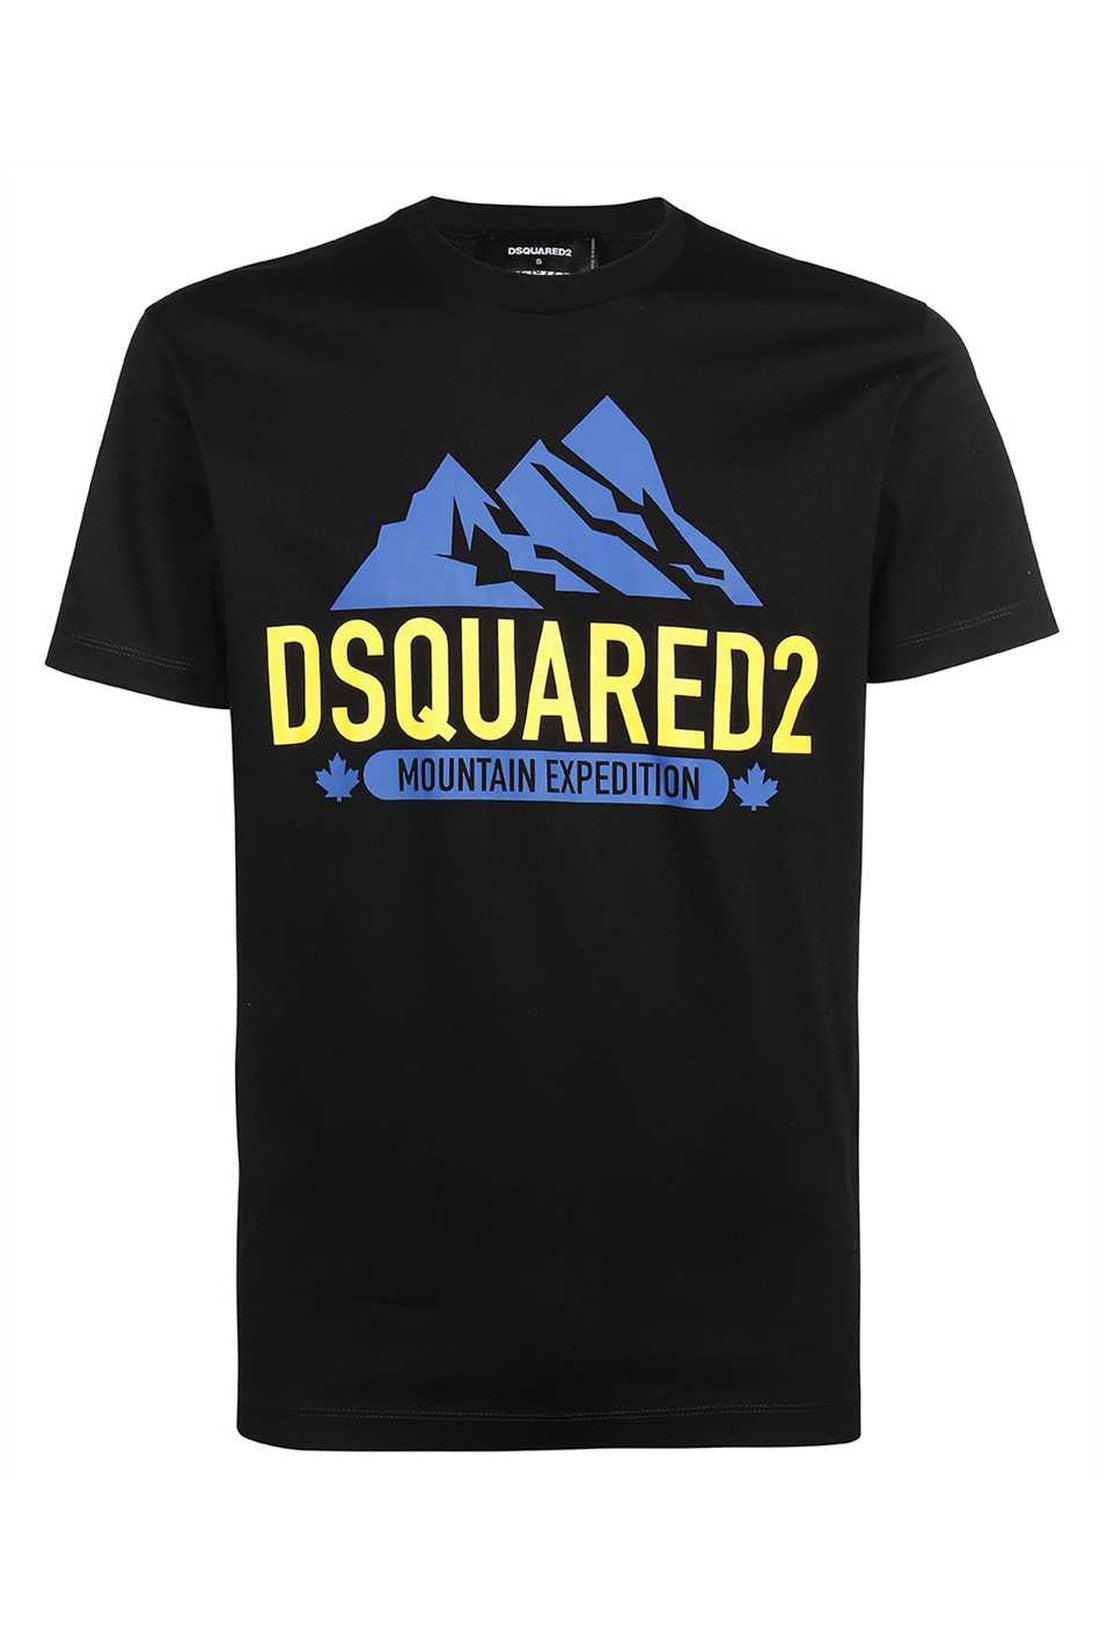 Dsquared2-OUTLET-SALE-Crew-neck-t-shirt-Shirts-L-ARCHIVE-COLLECTION_ed5edf38-2d5a-413a-ac56-14aca55ac581.jpg